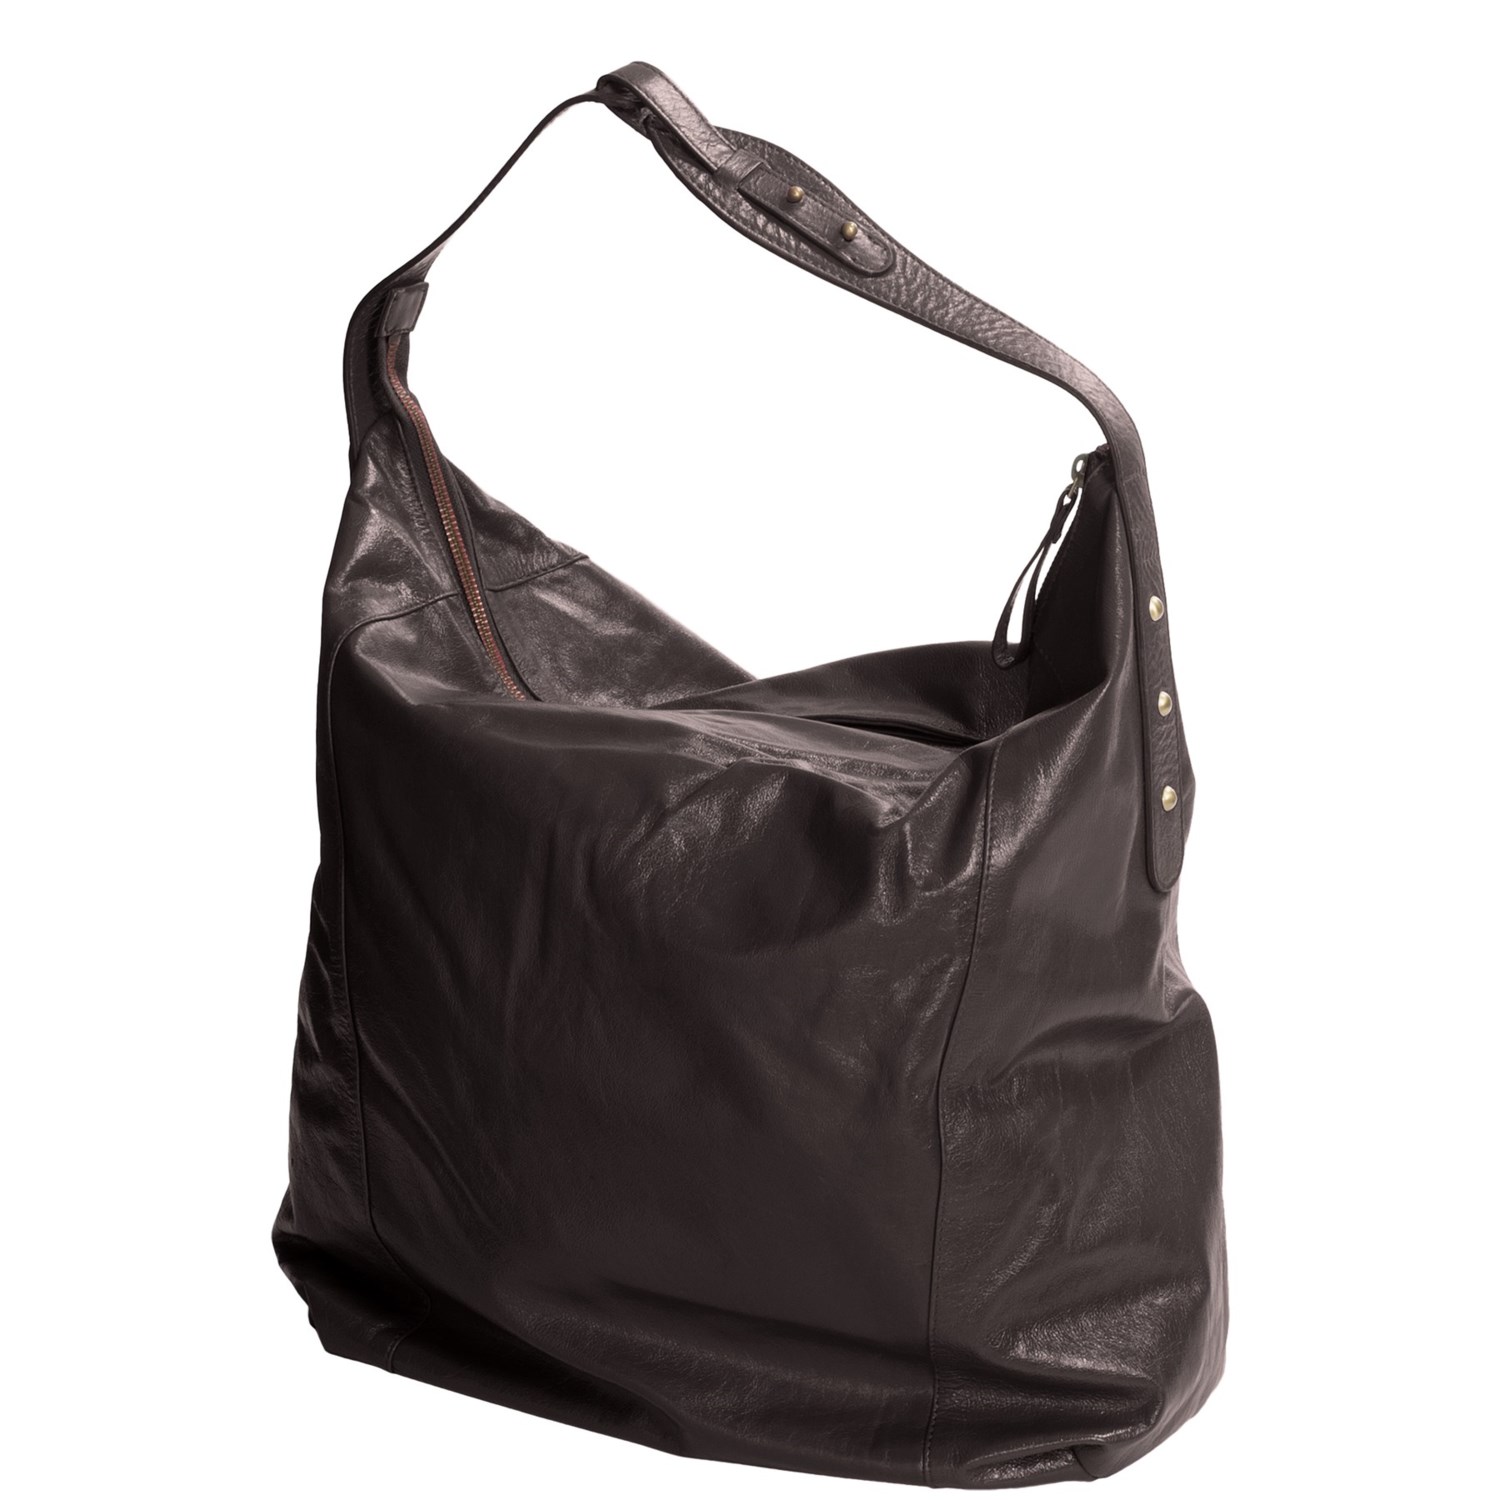 Latico Dianne Leather Shoulder Bag (For Women) 9185R - Save 63%